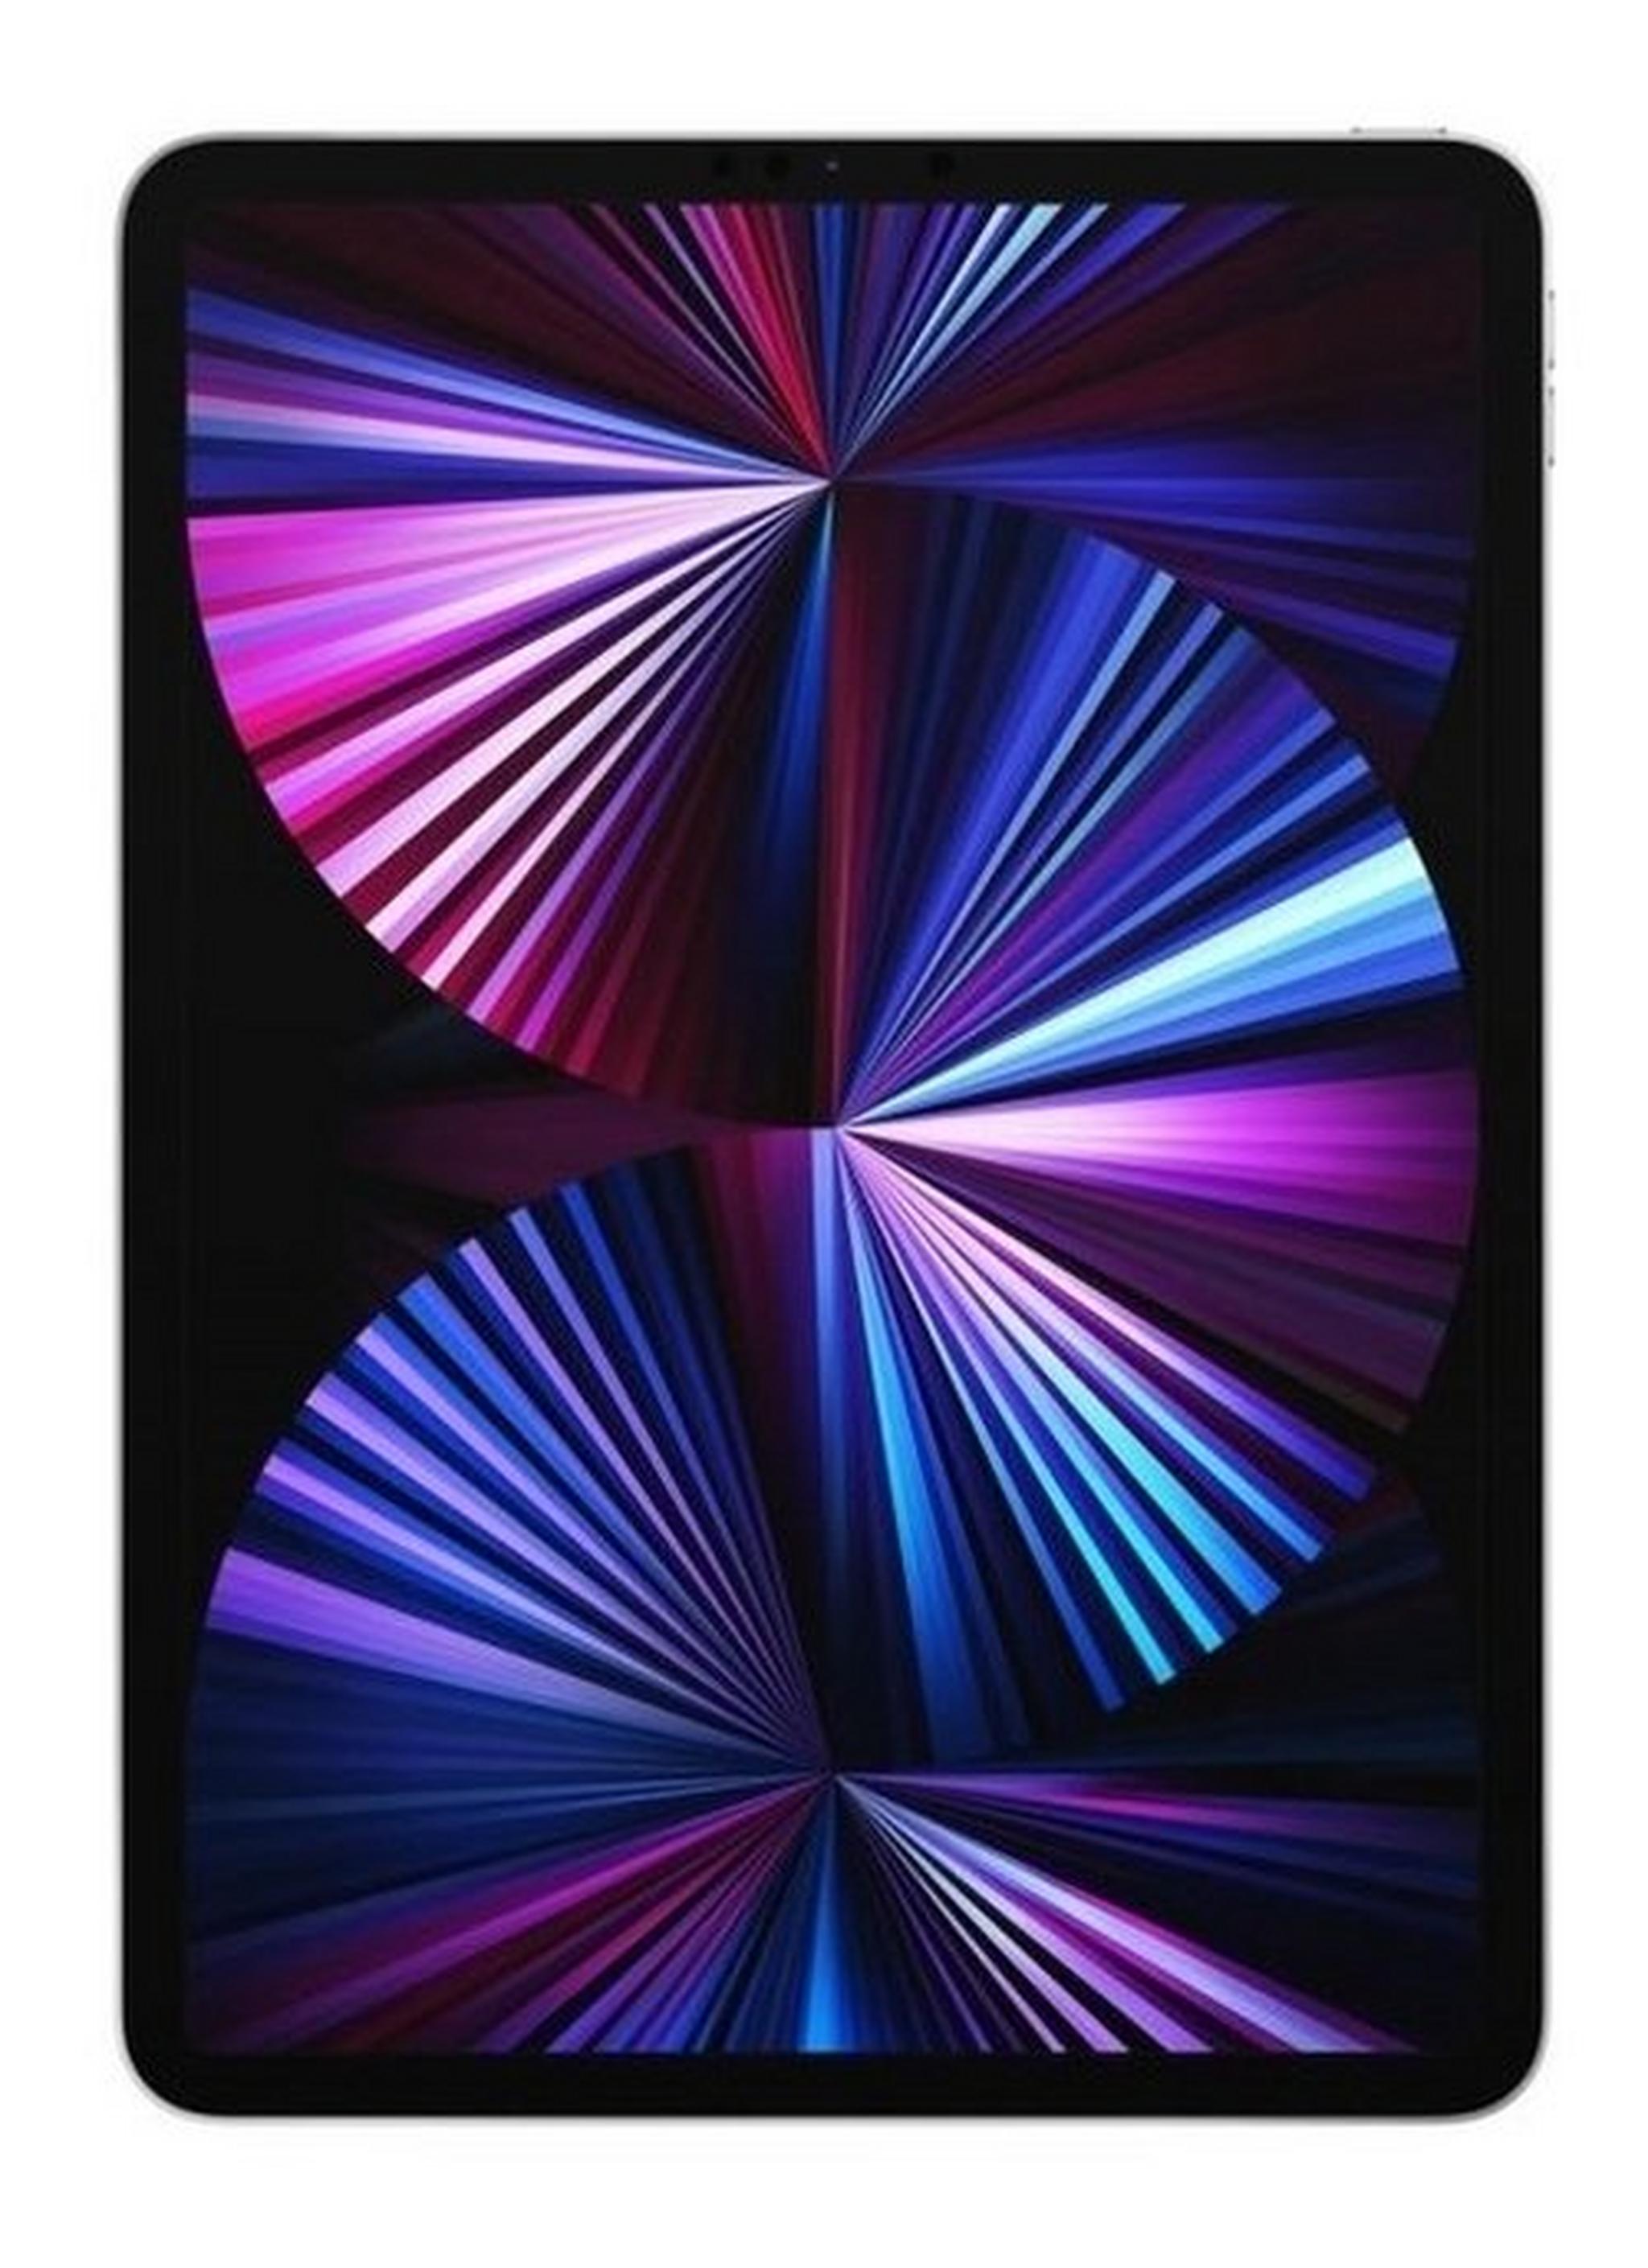 Apple iPad Pro 2021 M1 512GB Wifi 12.9-inch Tablet - Silver